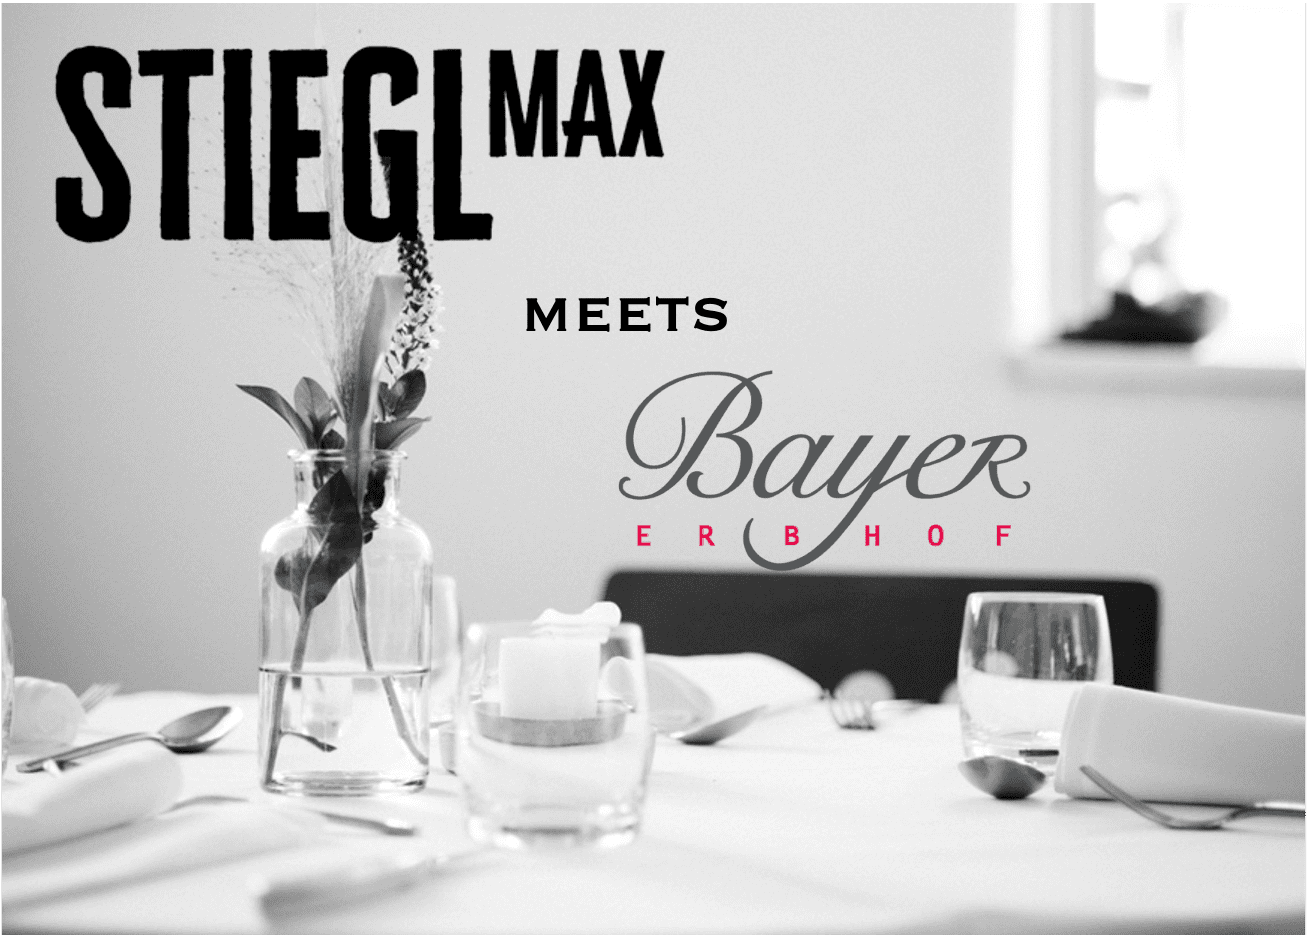 Stigl Max meets Weingut Bayer-Erbhof